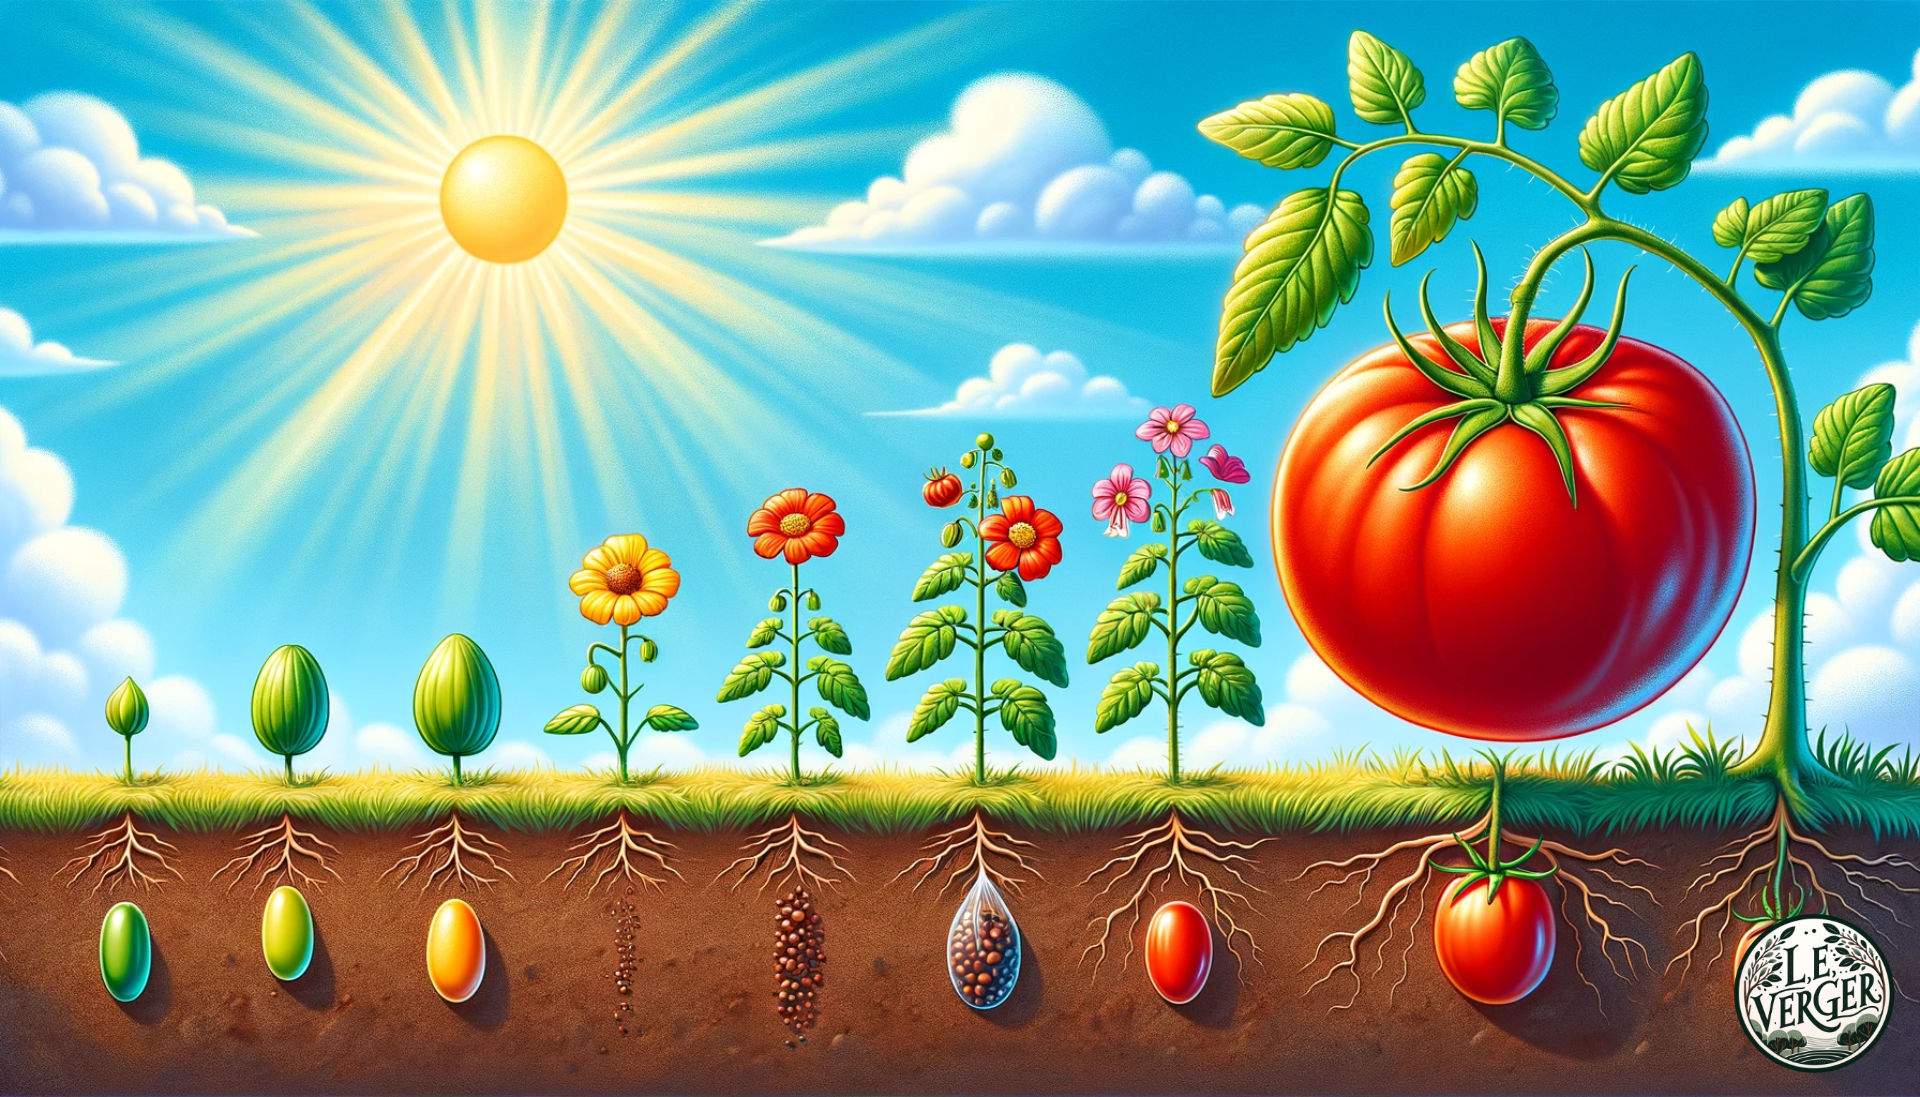 Planting Tomato Seeds